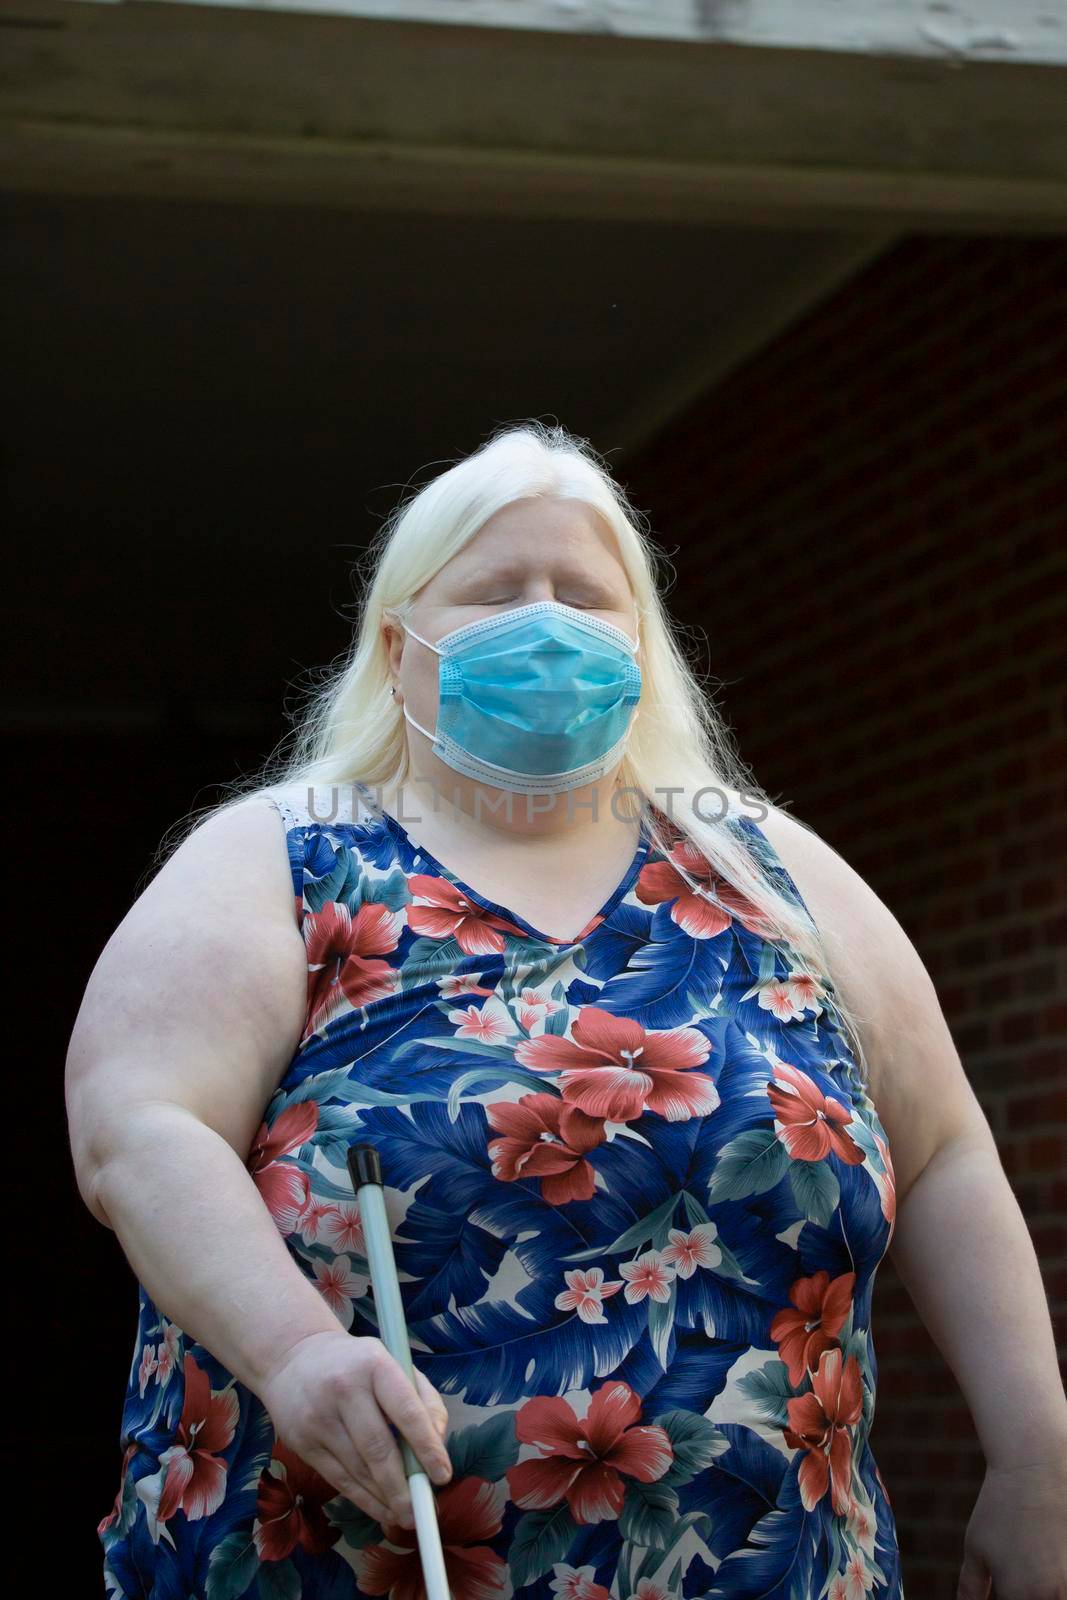 Albino Woman Wearing a Mask by tornado98